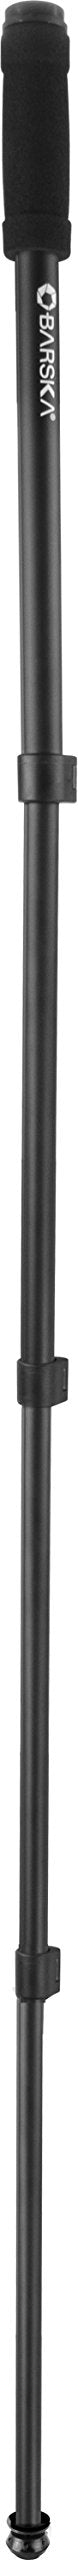  [AUSTRALIA] - BARSKA AF12548 Lightweight Extendable Monopod, Black